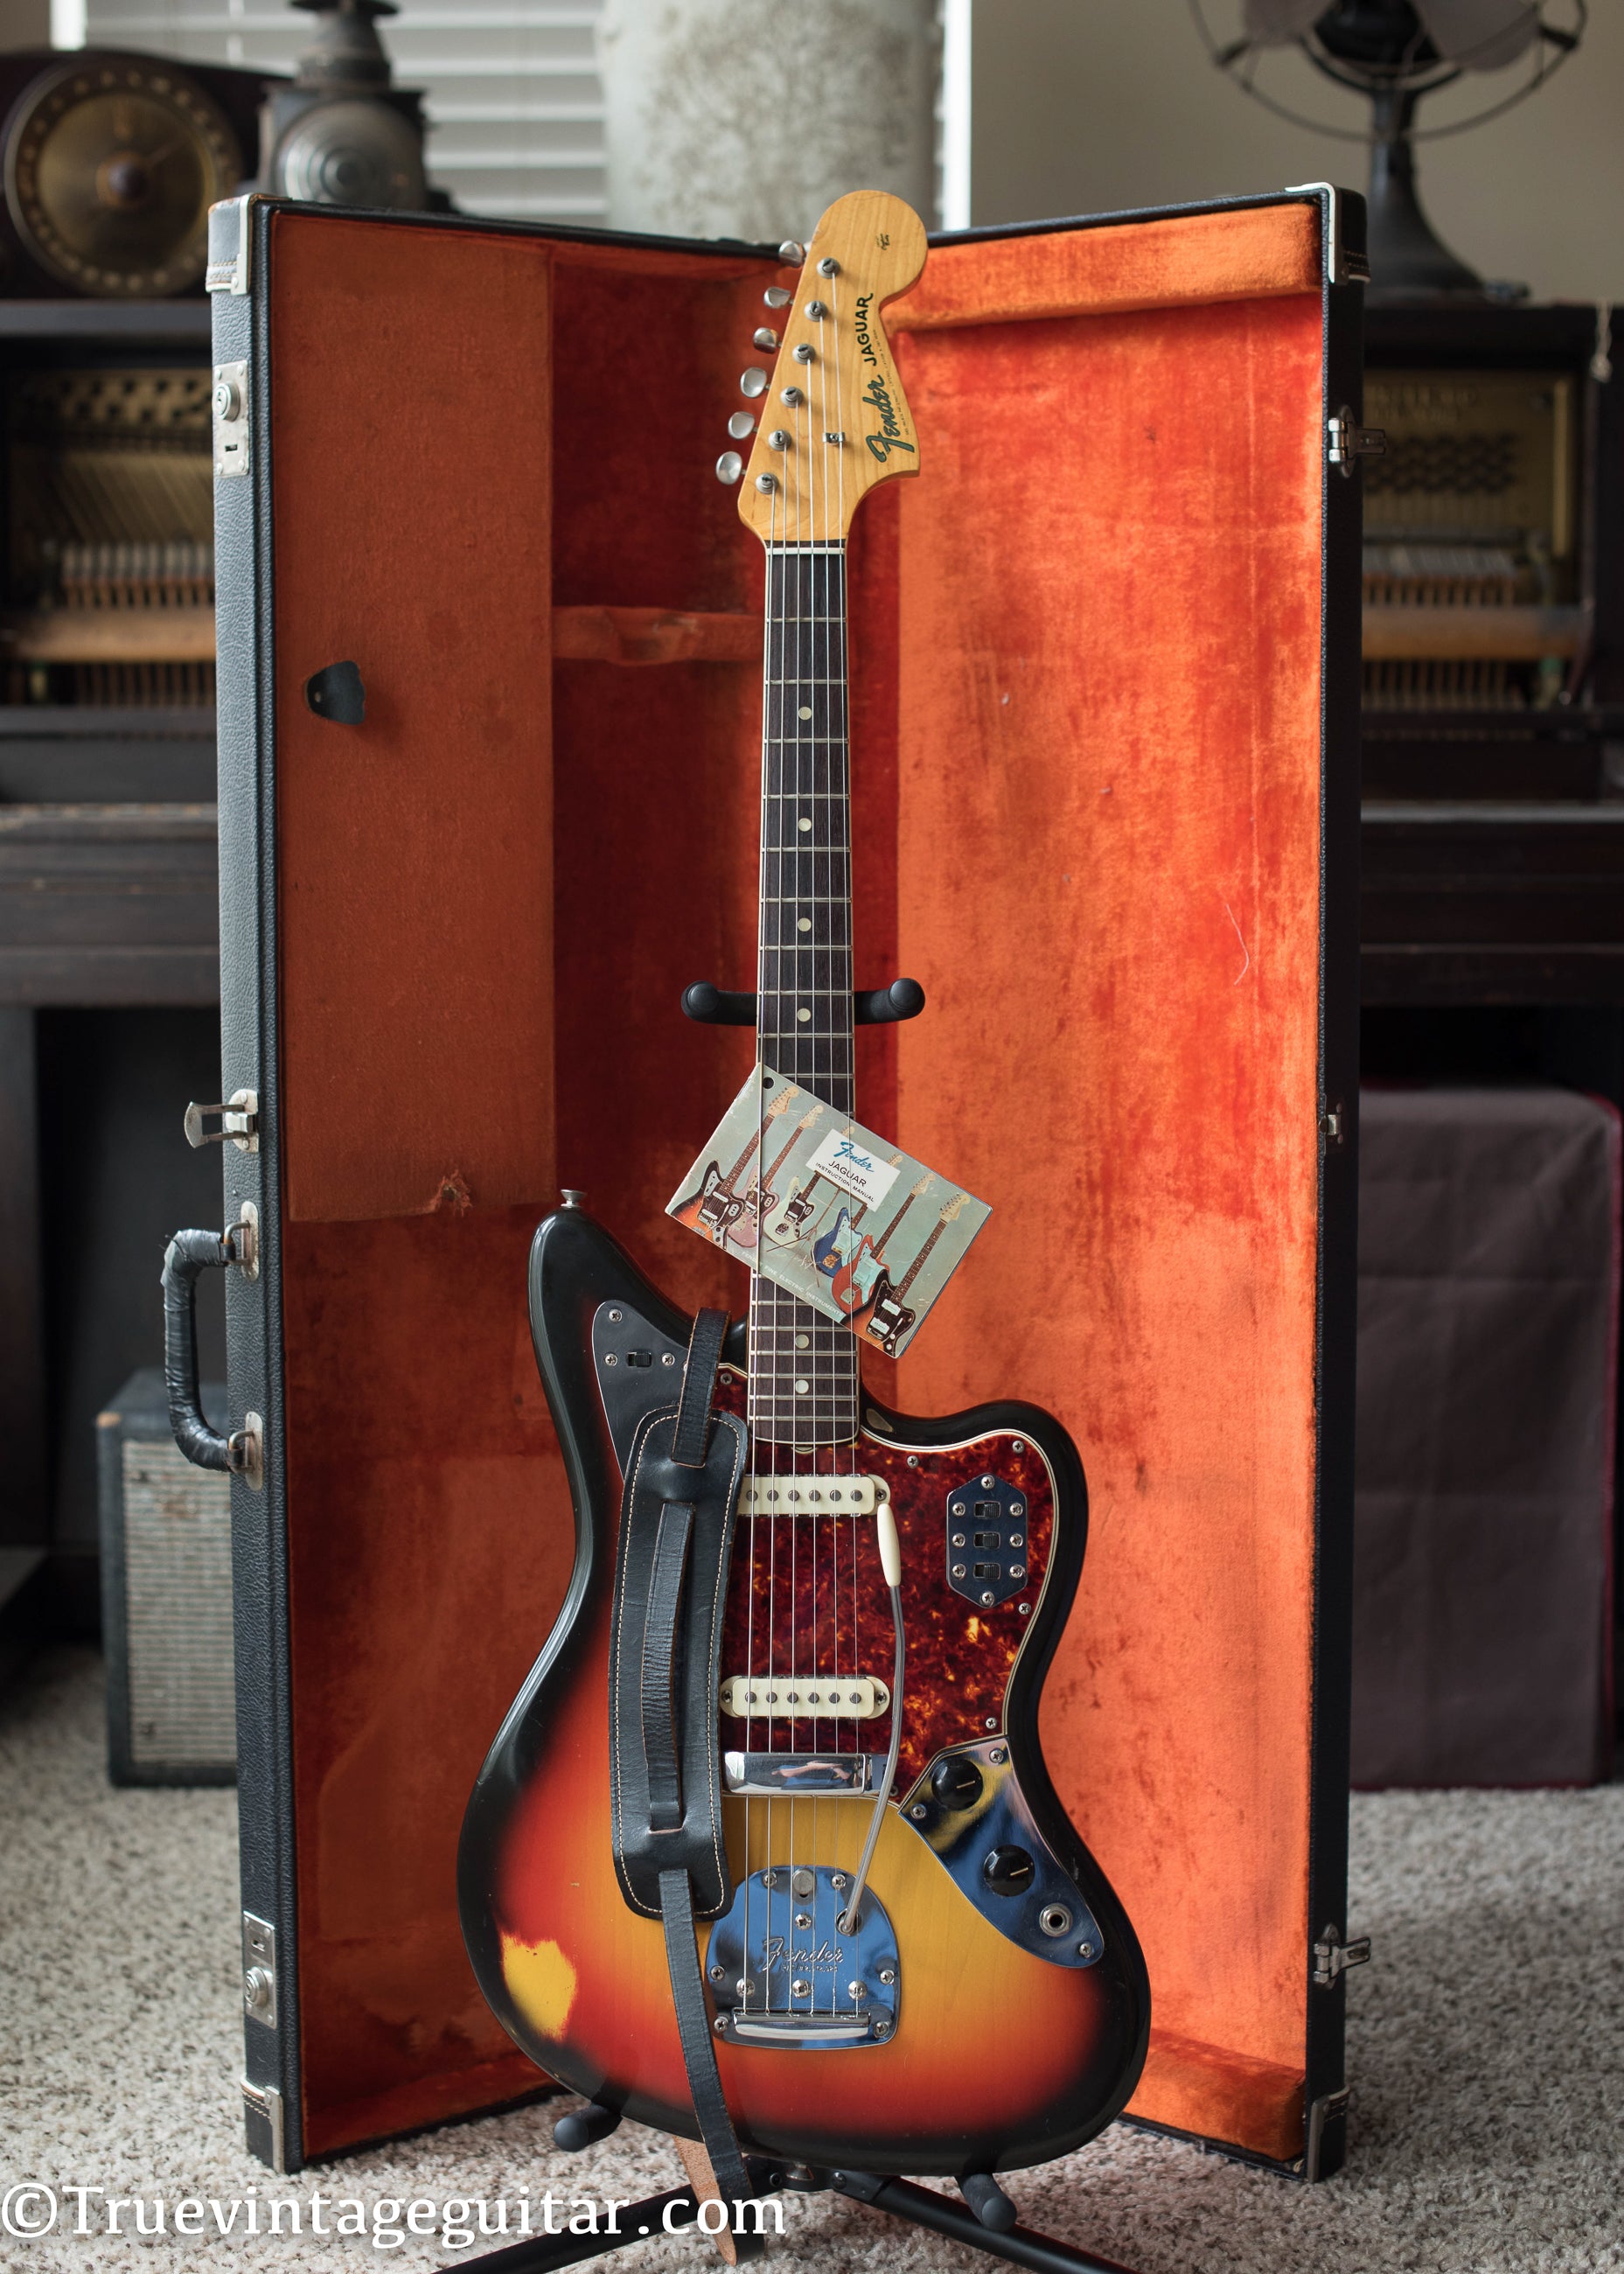 1965 Fender Jaguar Sunburst electric guitar